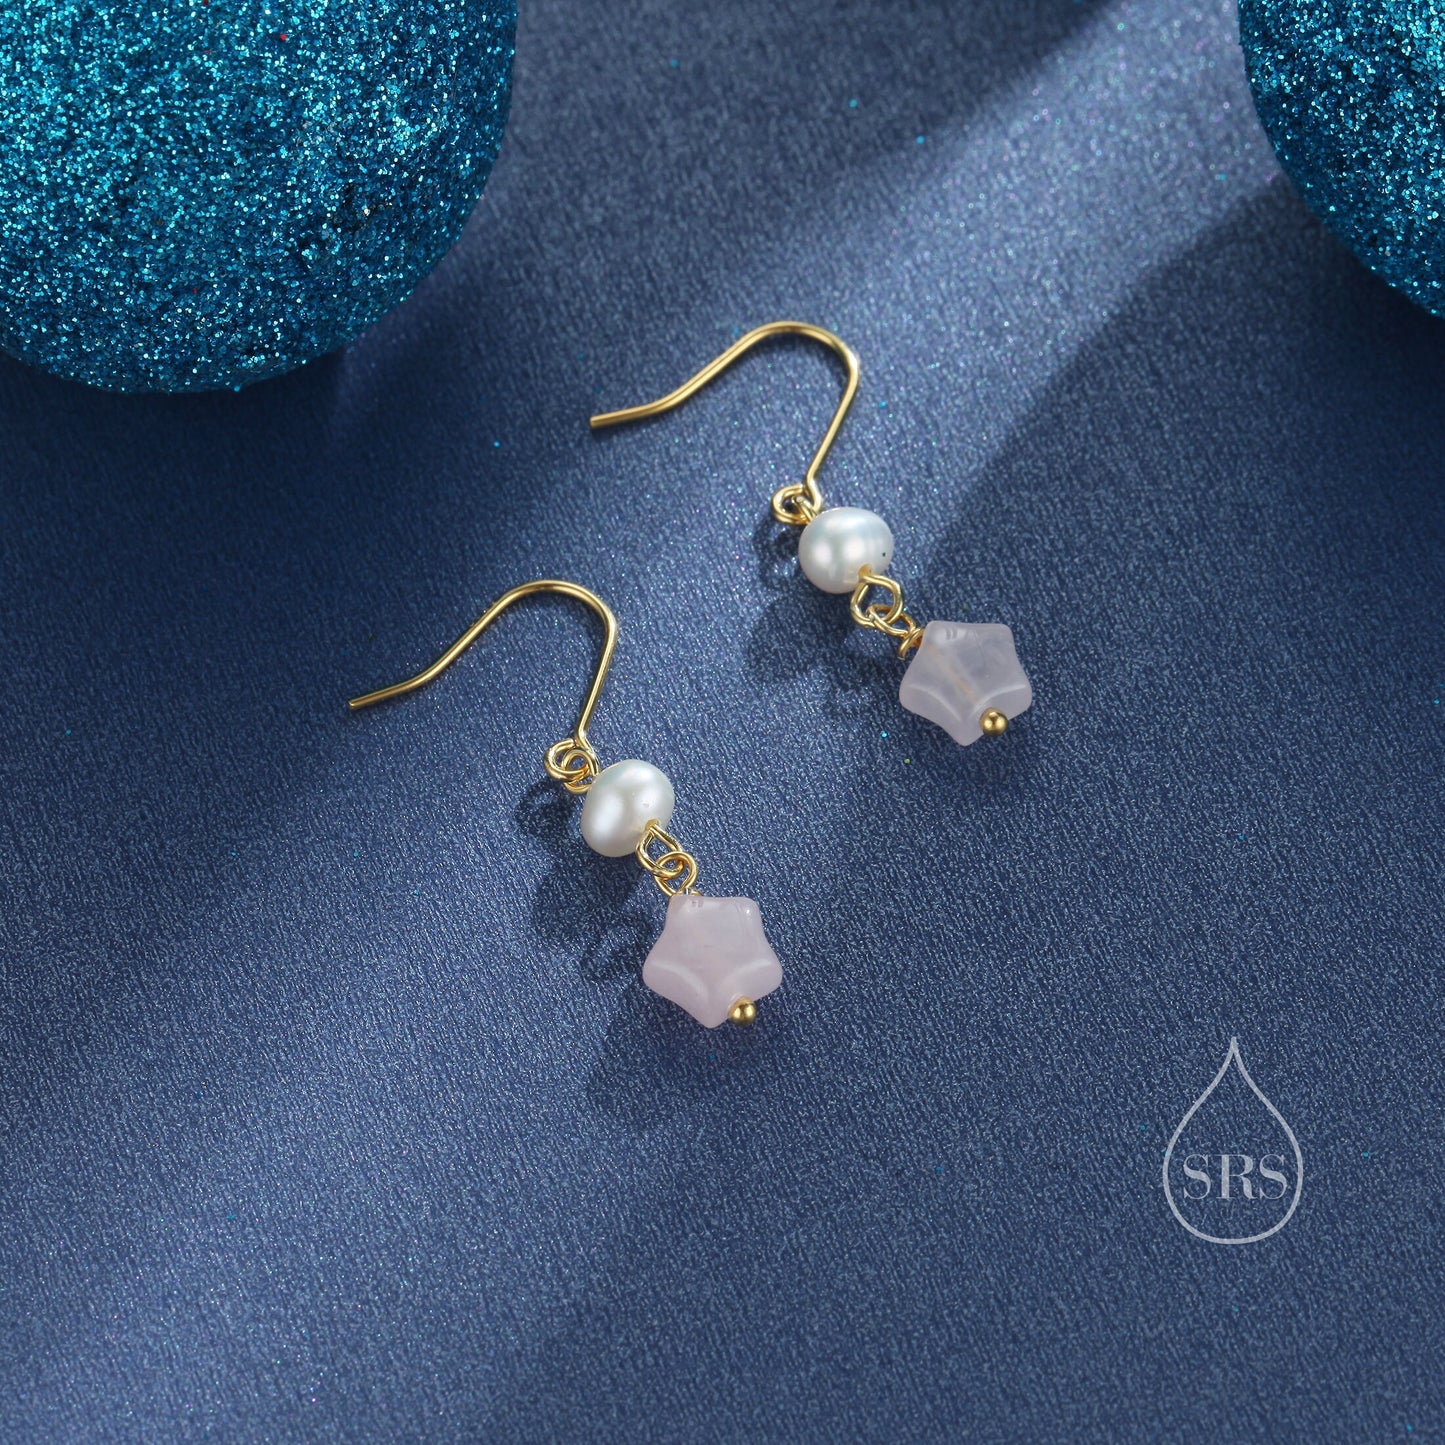 Genuine Rose Quartz Star and Pearl Drop Earrings in Sterling Silver, Natural Pink Quartz and Freshwater Pearl Drop Hook Earrings, Star